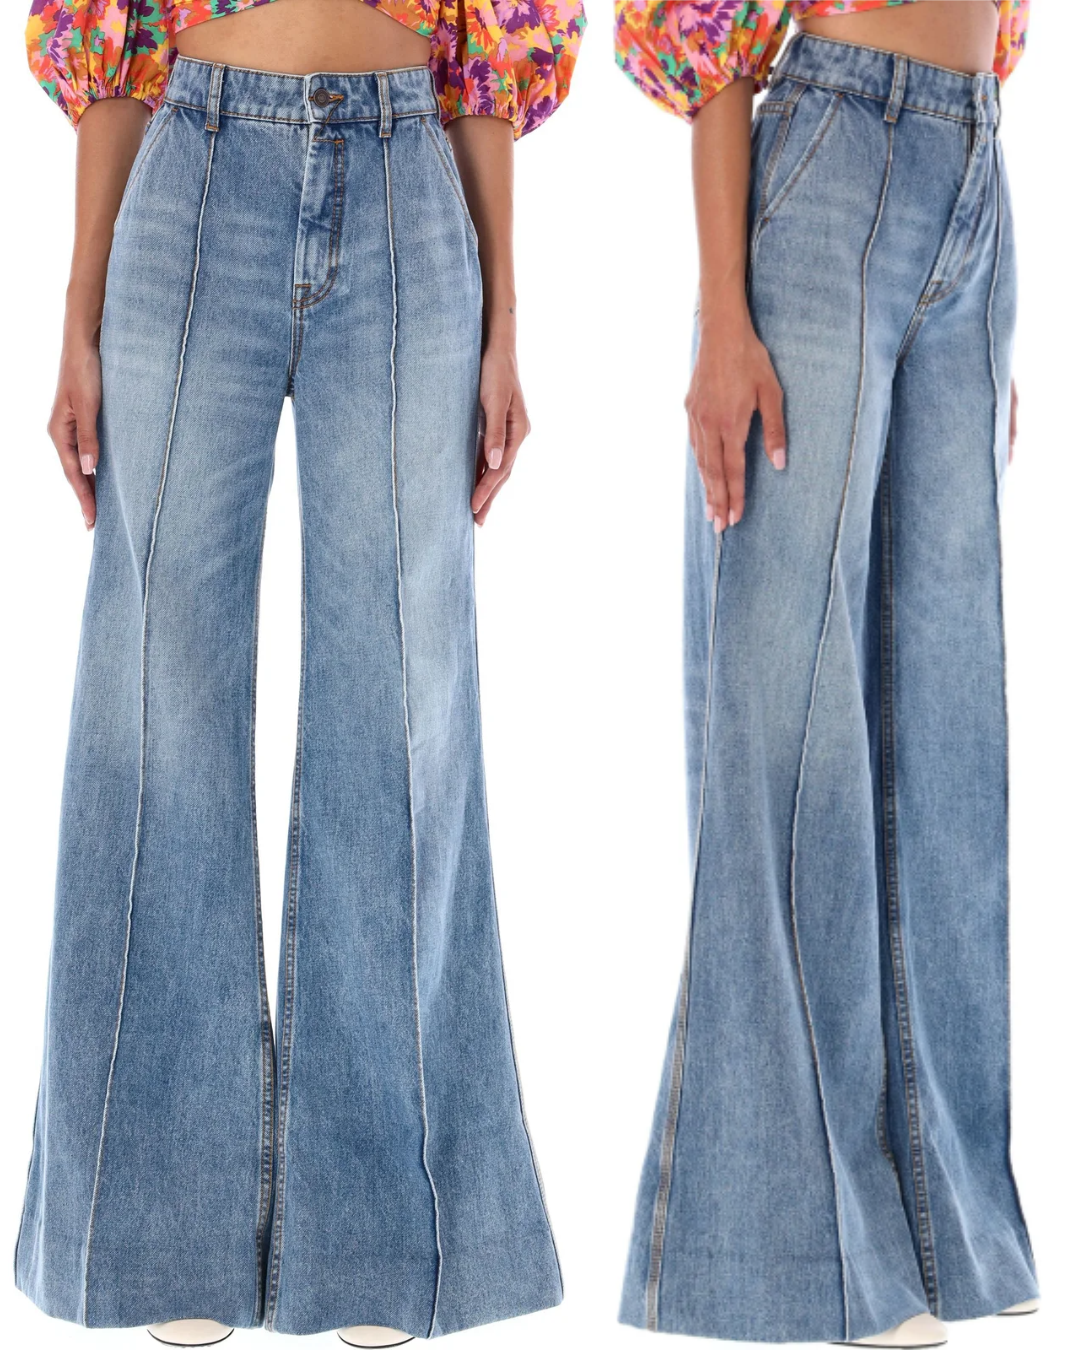 Lismali Signature Fit High-Rise Ultra Flare Jeans